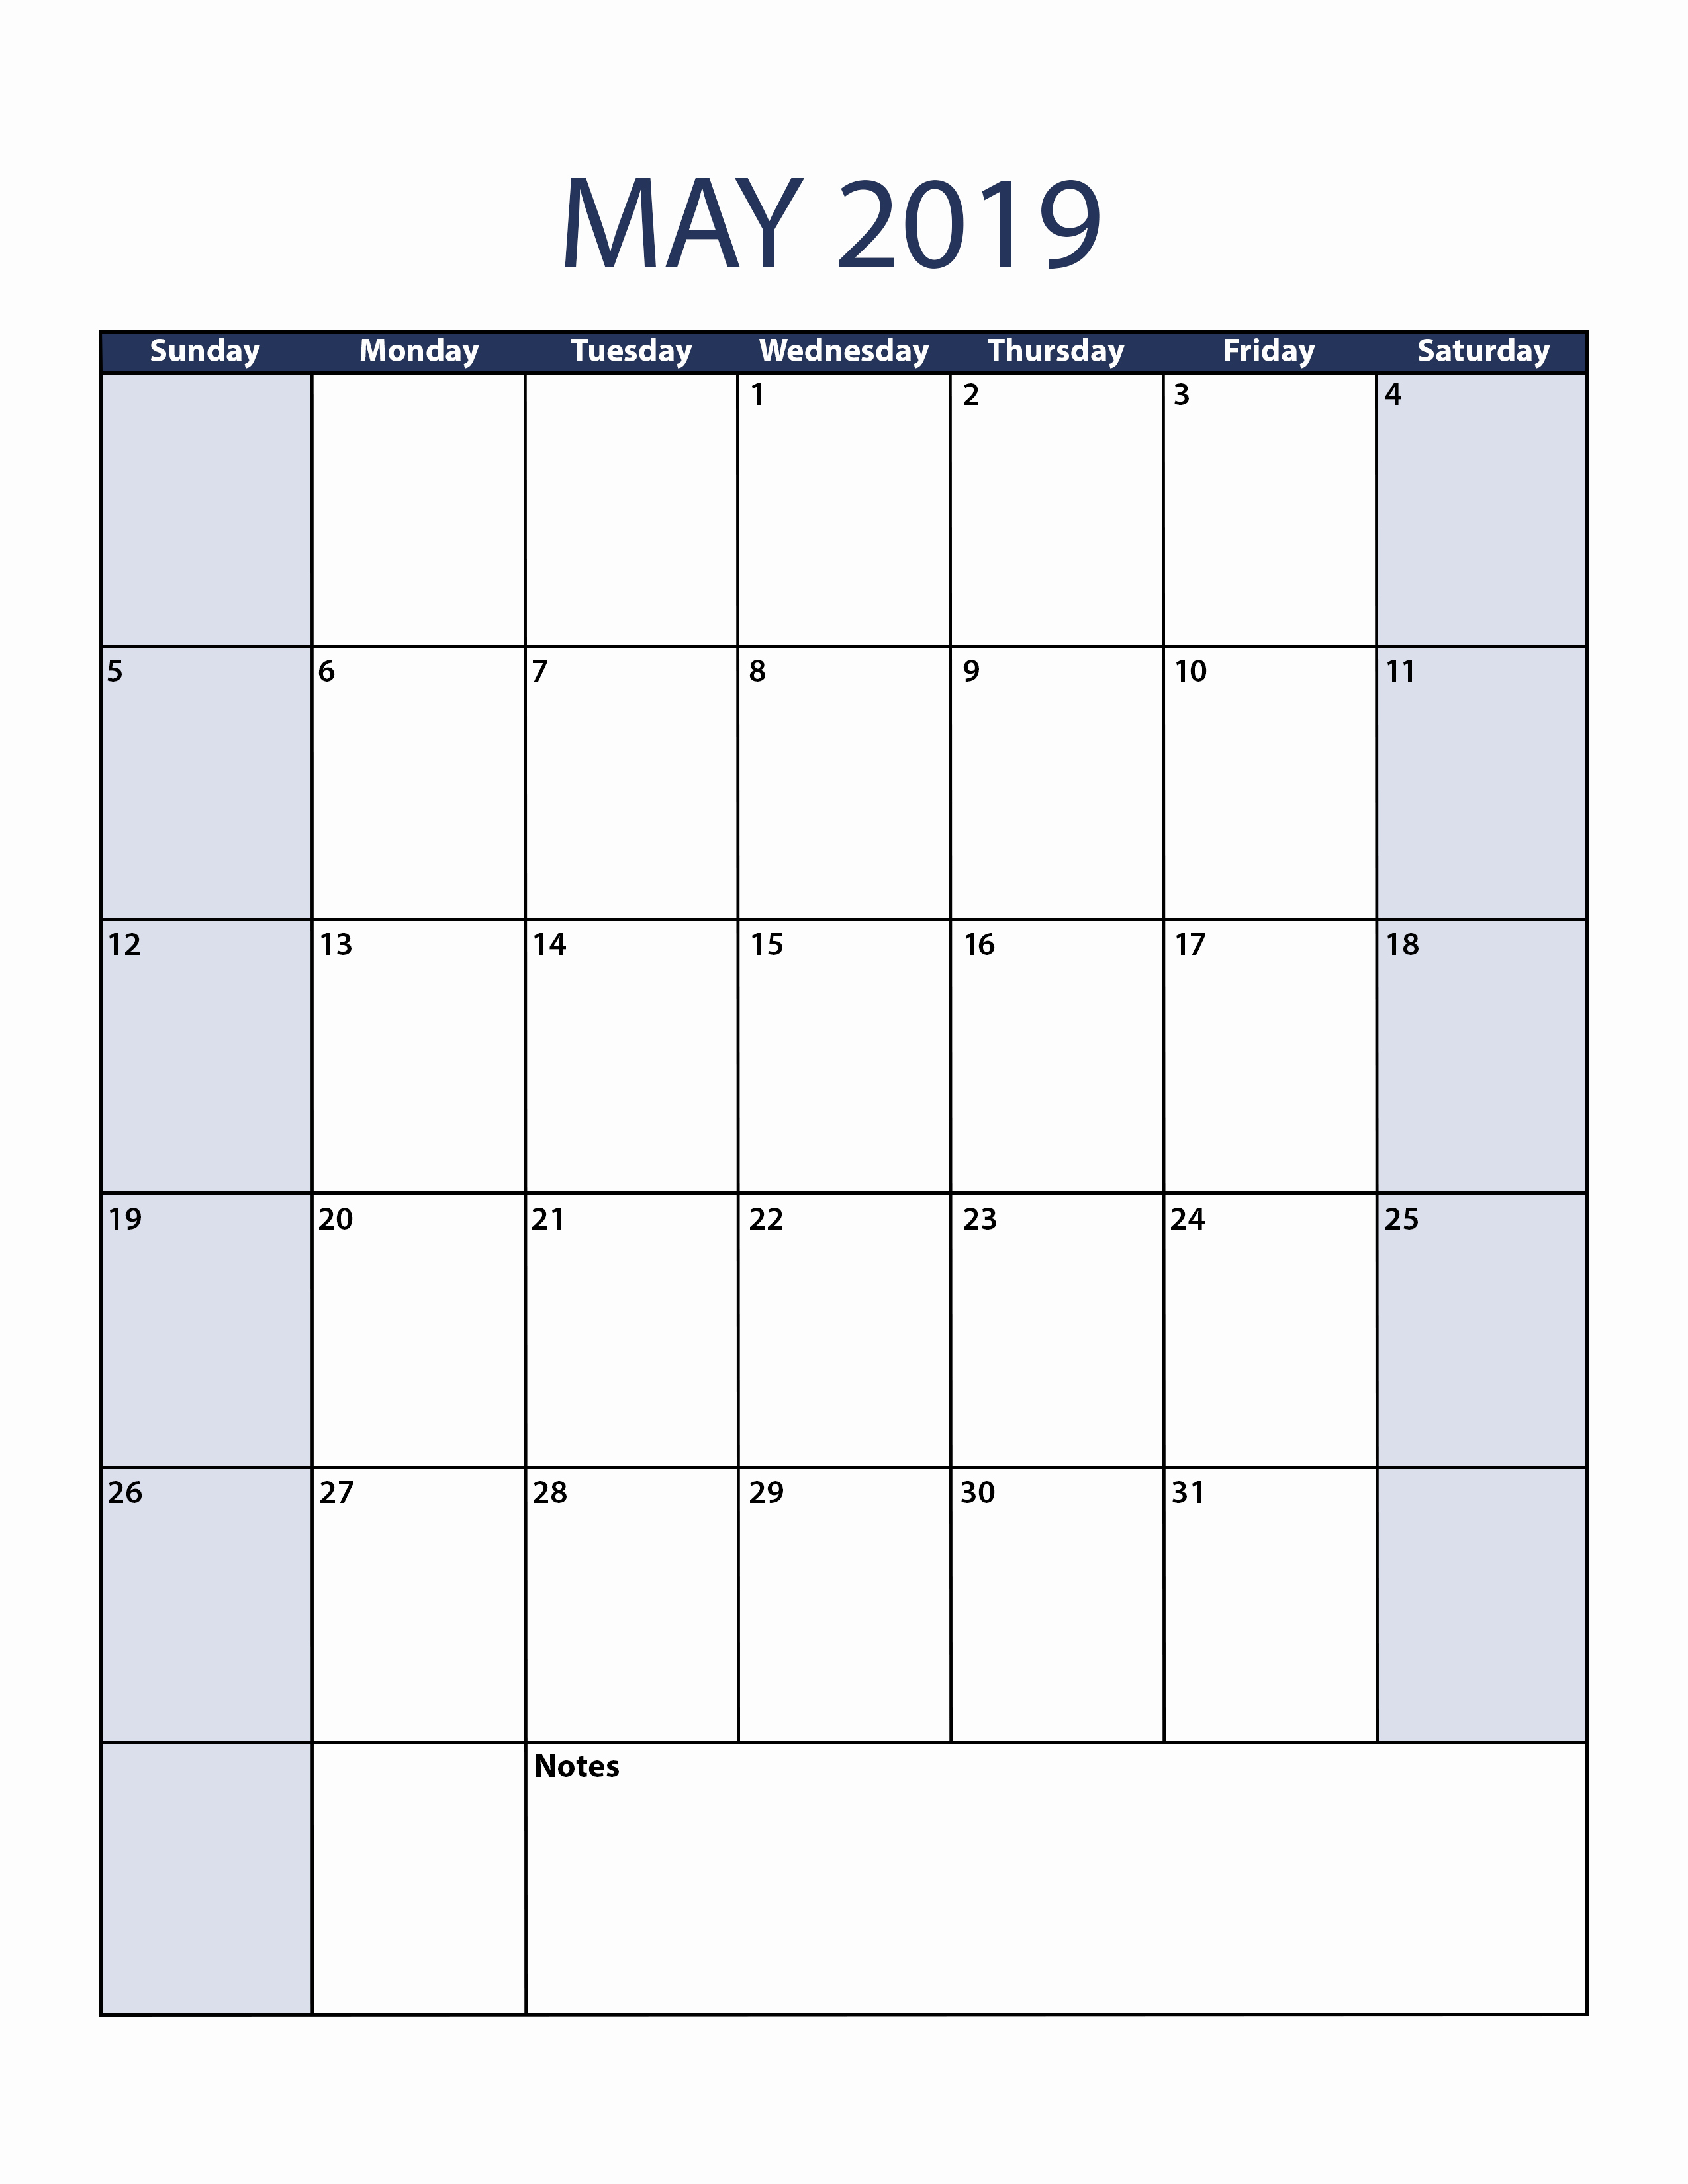 Microsoft Office Calendar Templates 2019 Fresh May 2019 Calendar Template